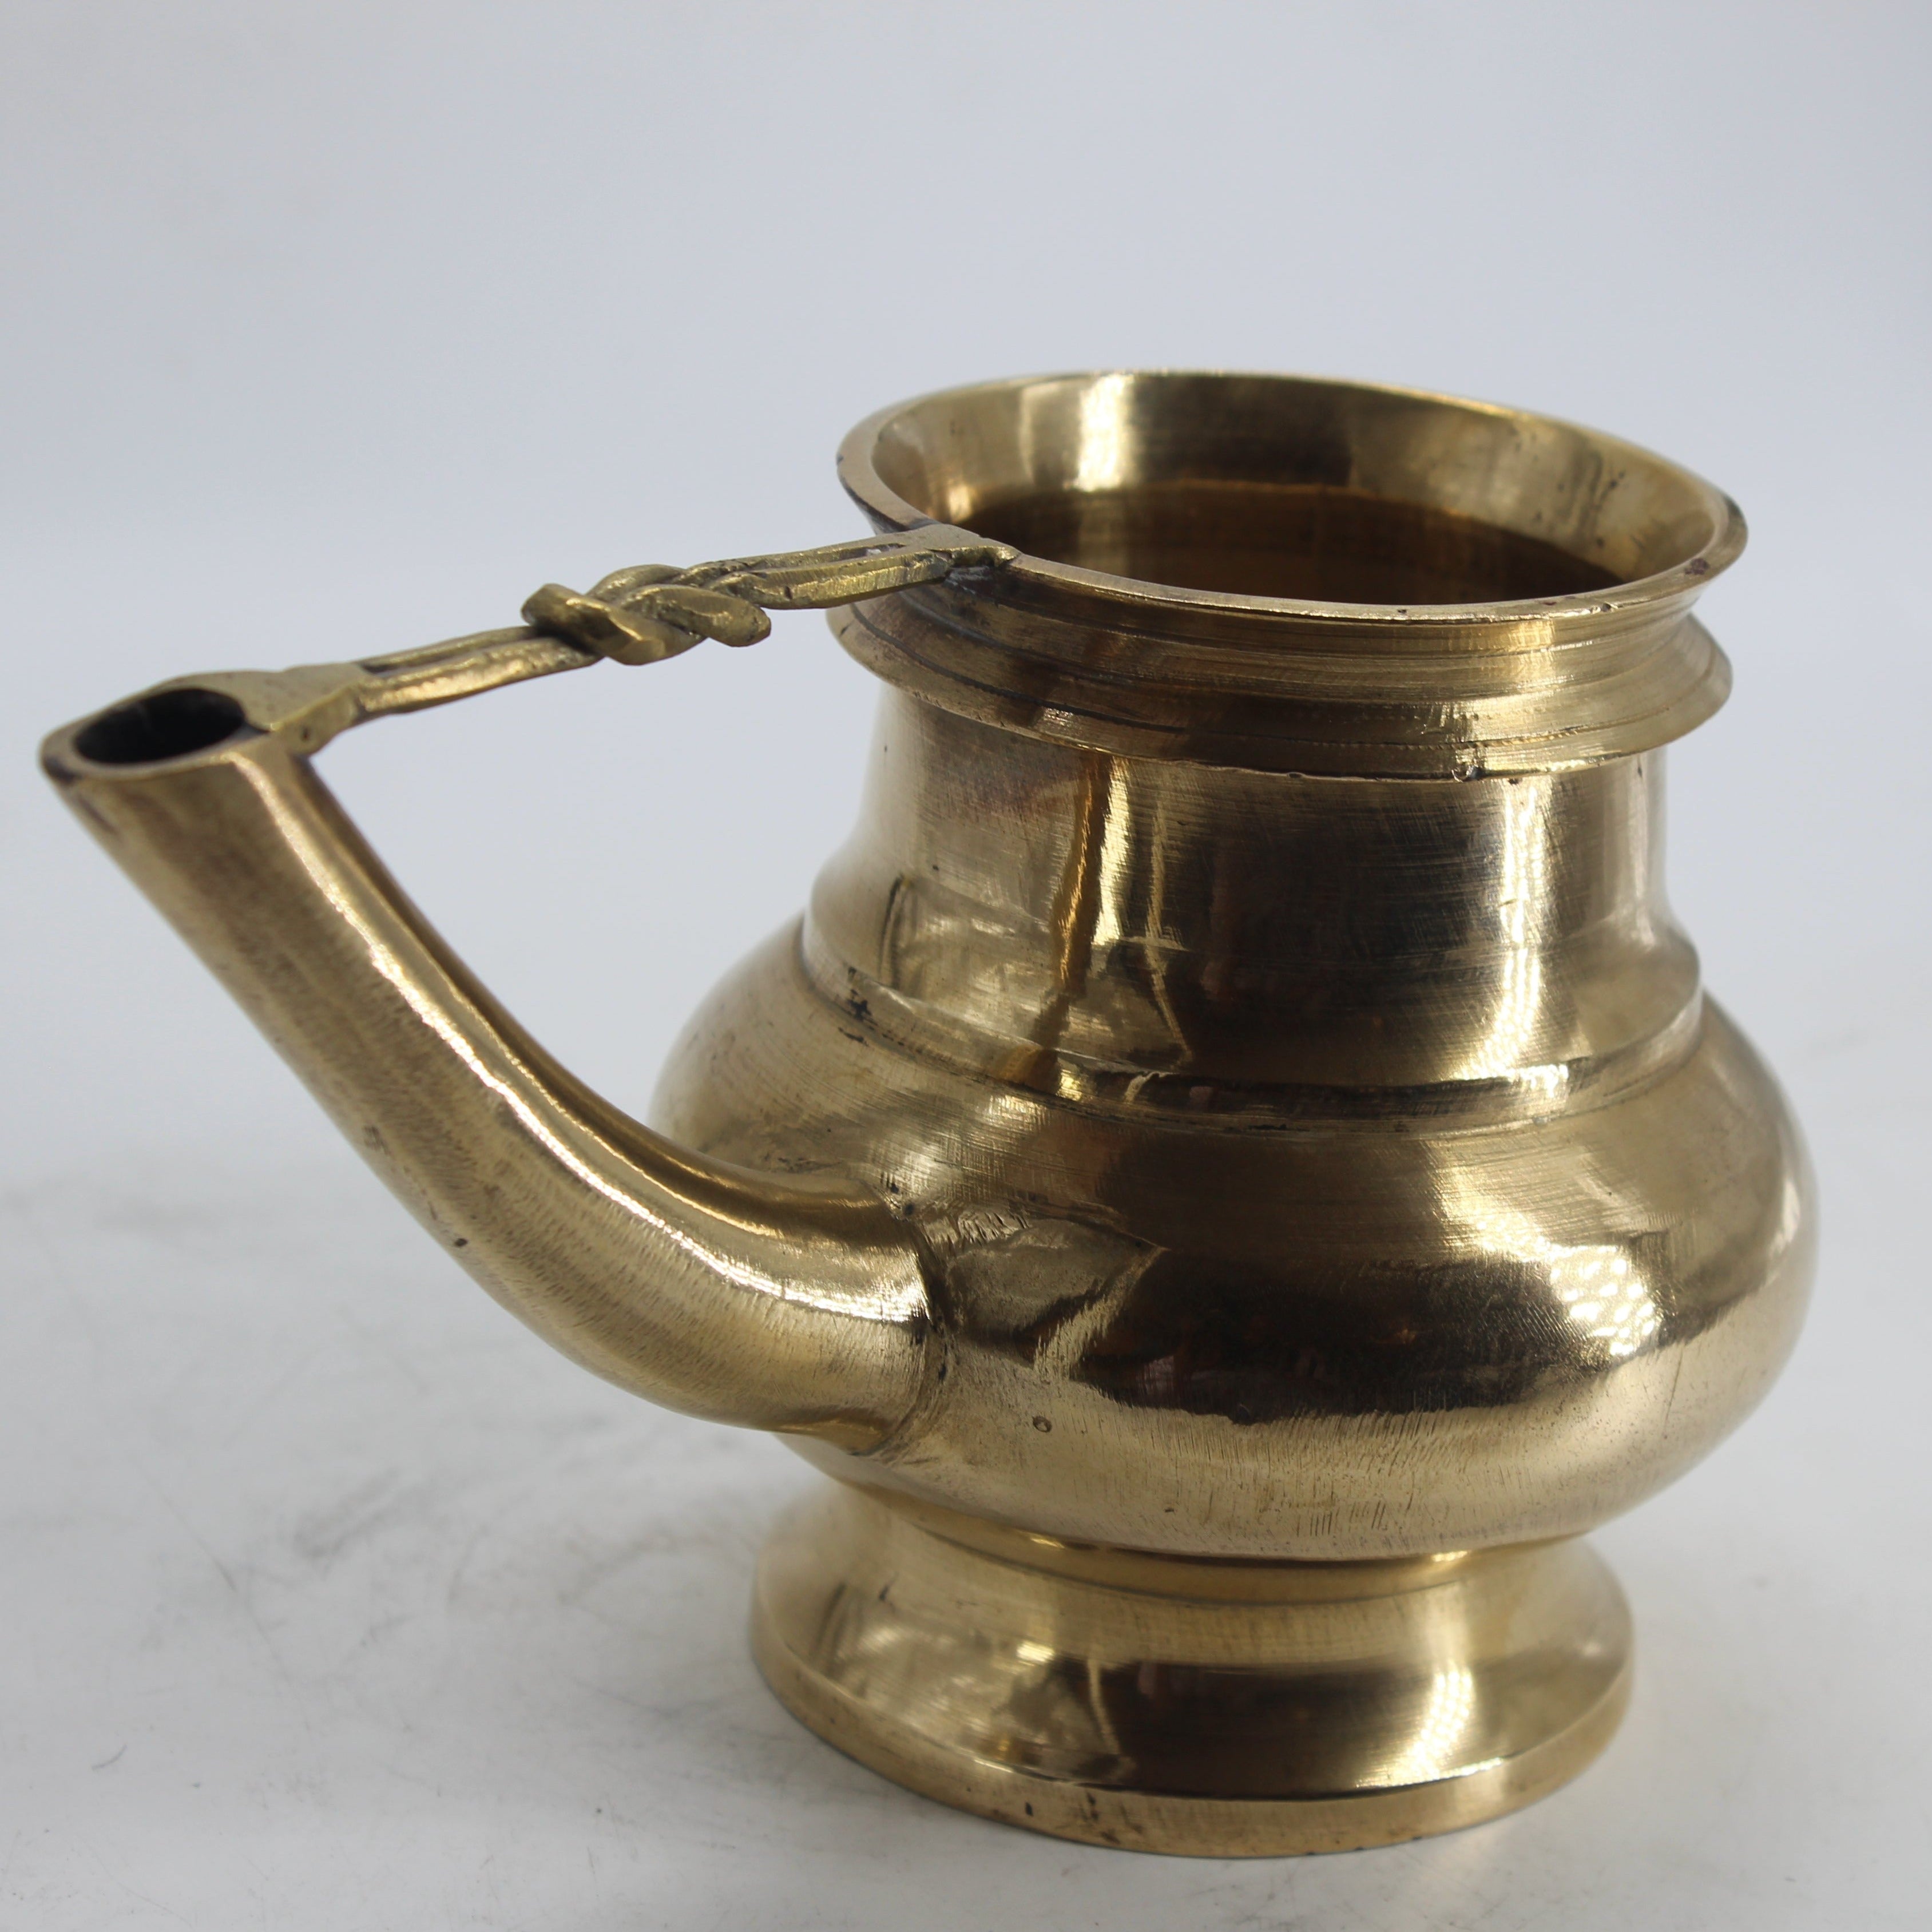 Brass Naadan Pavithra Kindi - Premium Brass from Cherakulam Vessels & Crockery - Just Rs. 928! Shop now at Cherakulam Vessels & Crockery